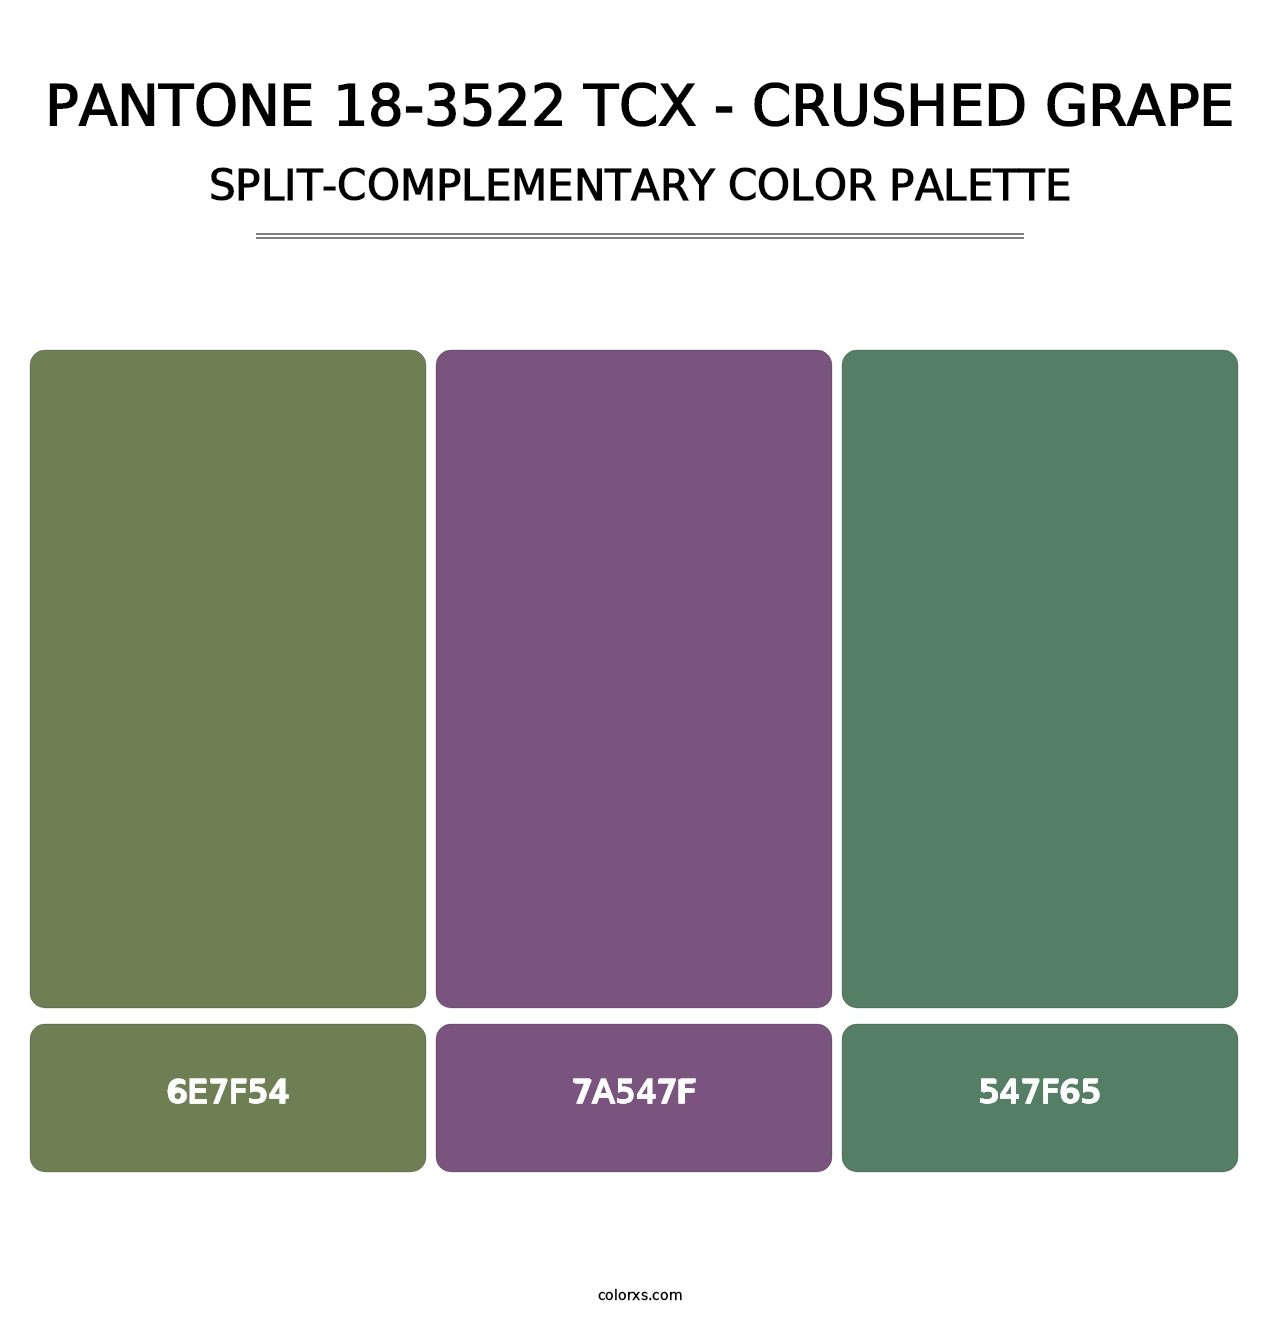 PANTONE 18-3522 TCX - Crushed Grape - Split-Complementary Color Palette